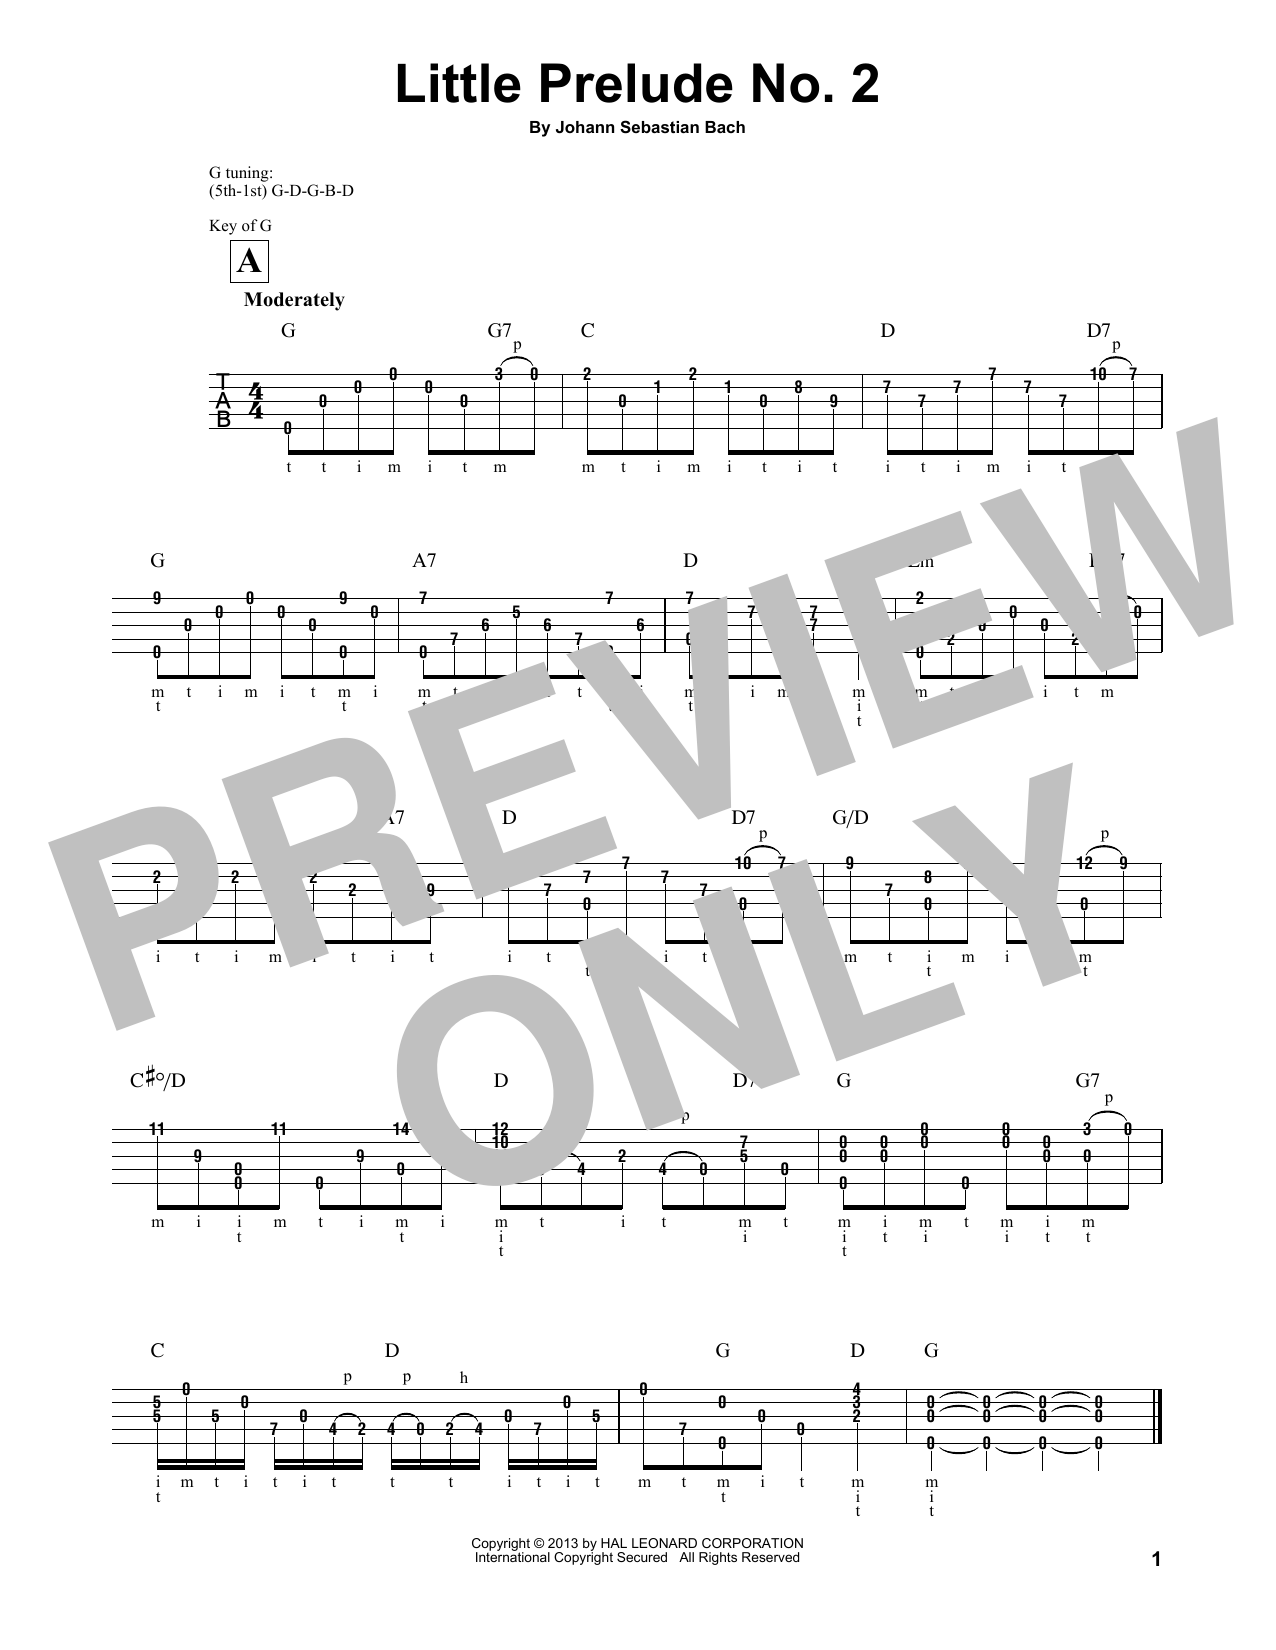 Download Mark Phillips Little Prelude No. 2 in C Major Sheet Music